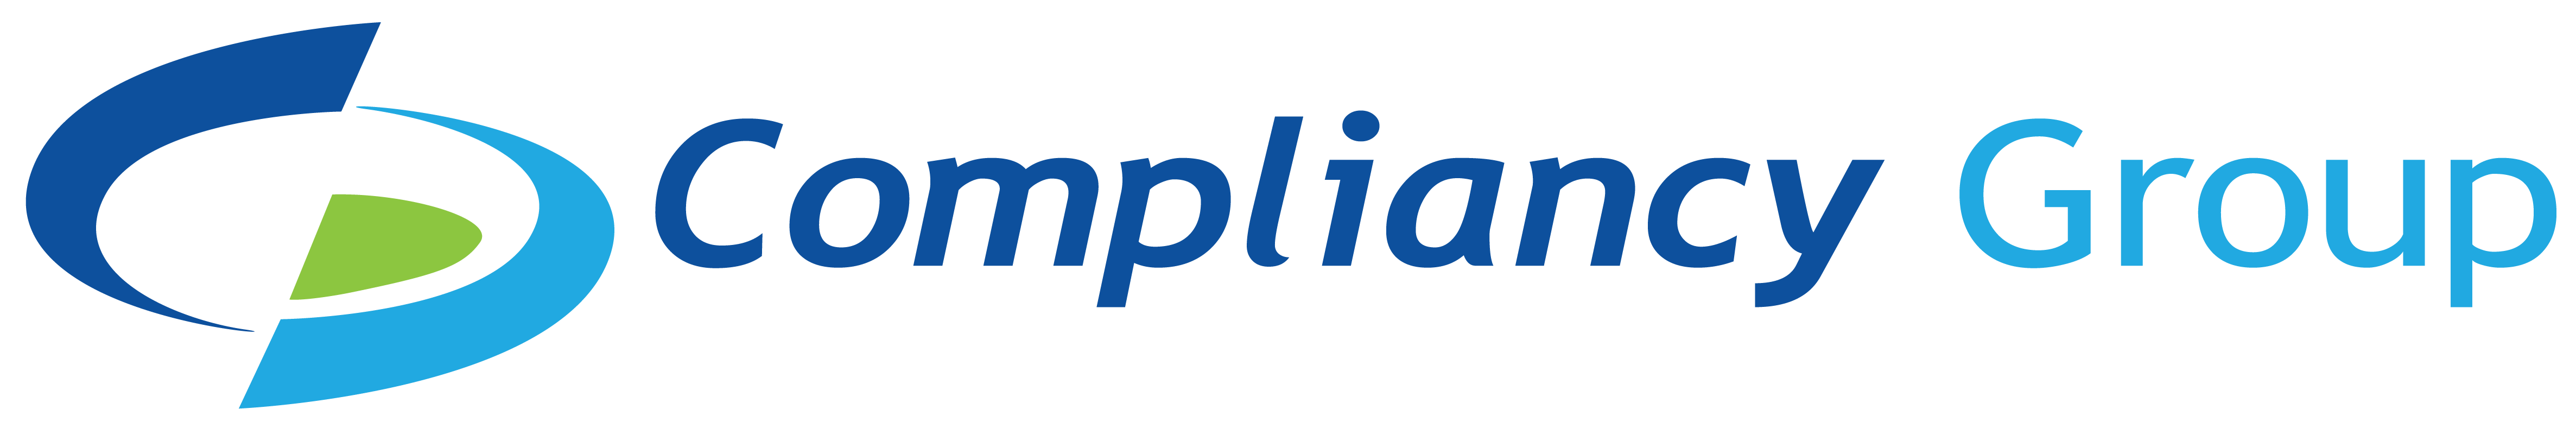 HIPAA Compliance Software